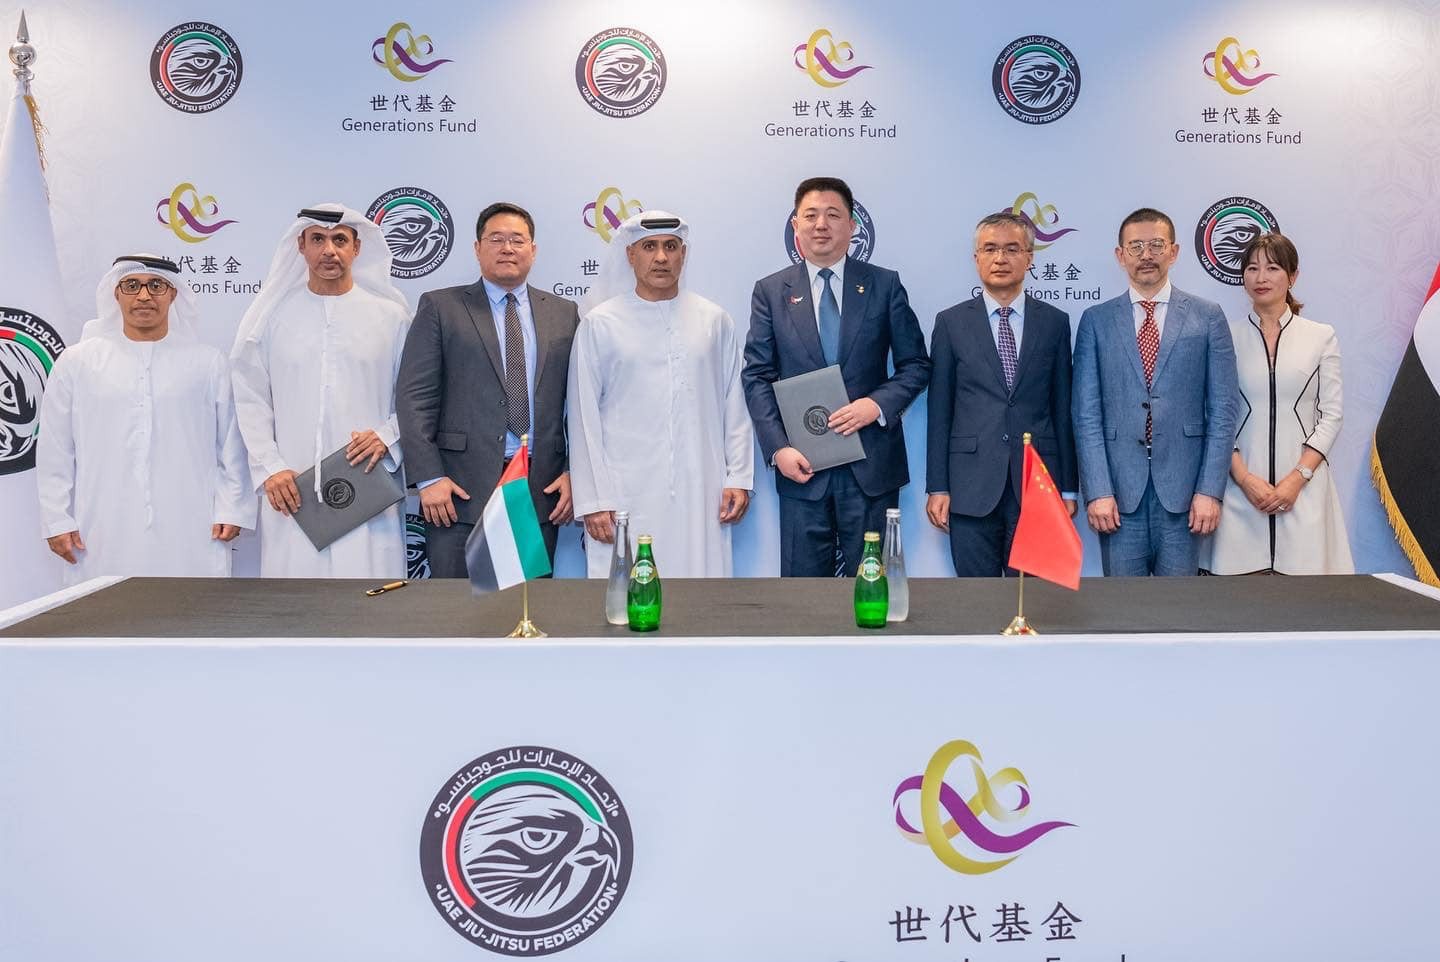 UAE Jiu-Jitsu Federation and China's Generations Fund sign agreement before Asian Games